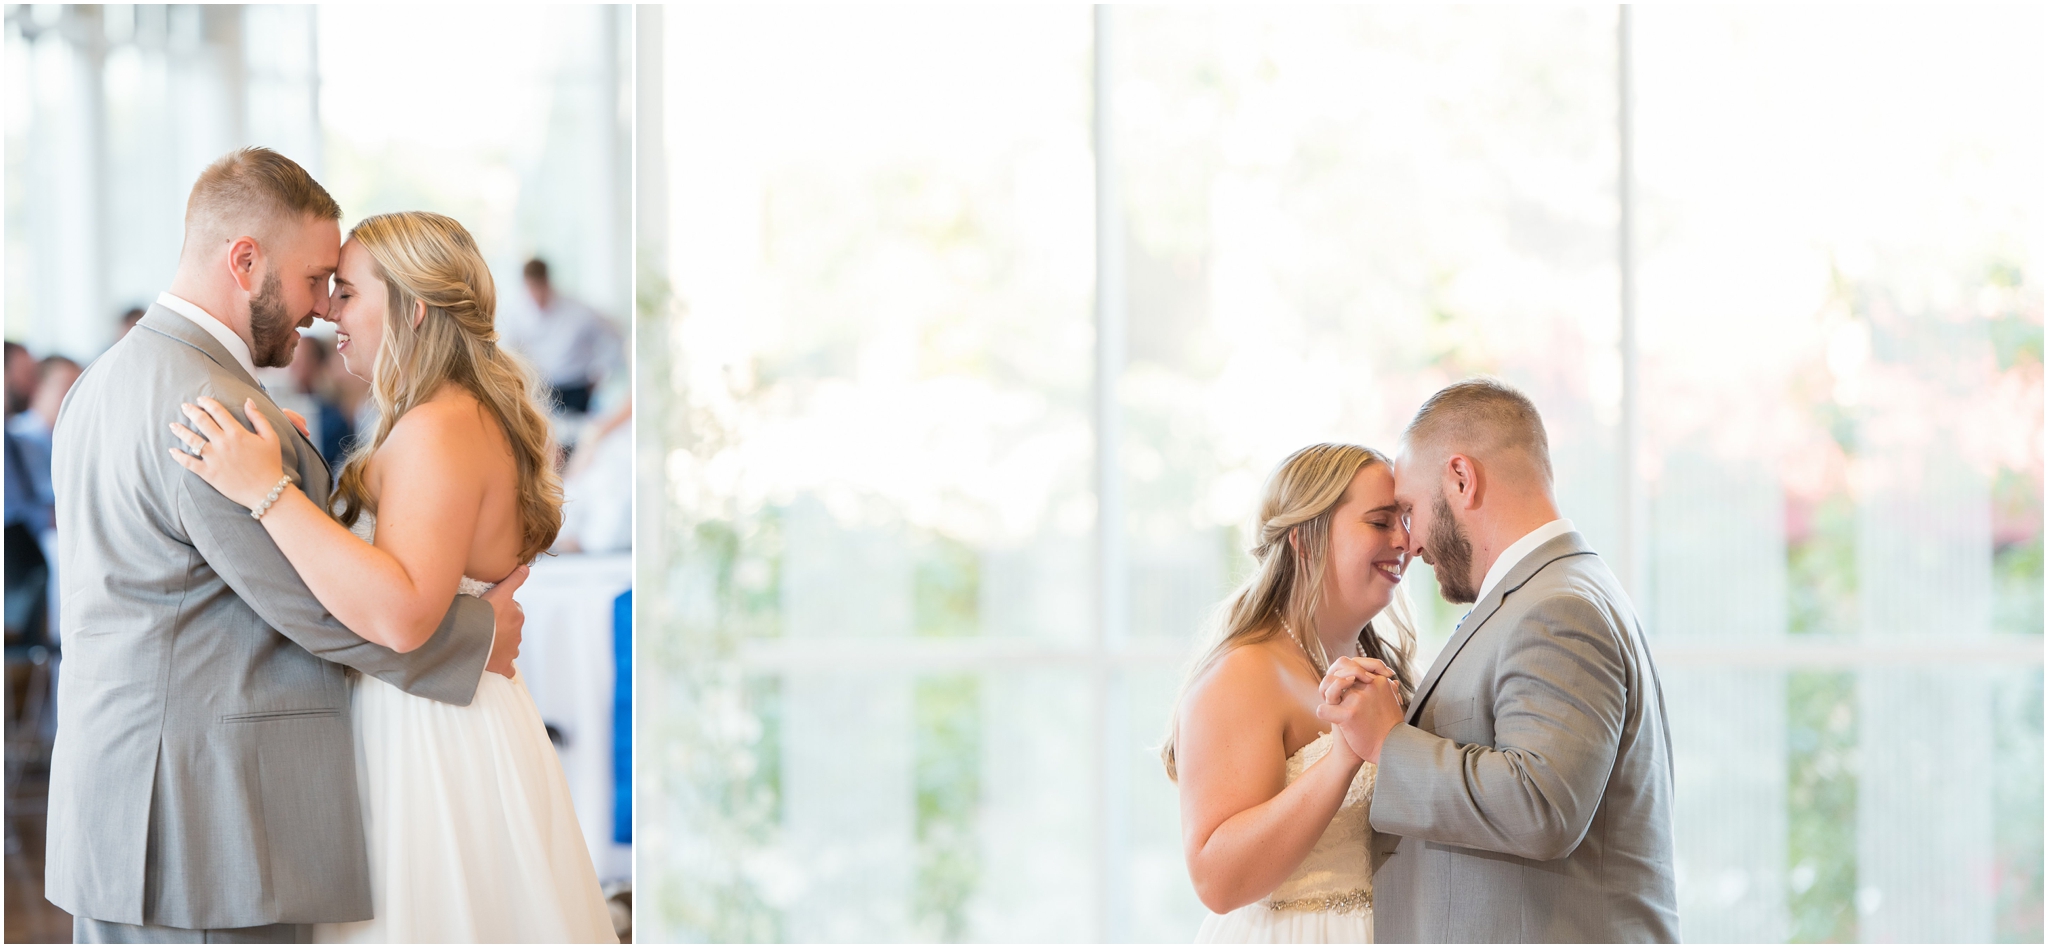 Colin + Megan | The Commons Wedding | Columbus, Indiana | royal blue wedding colors